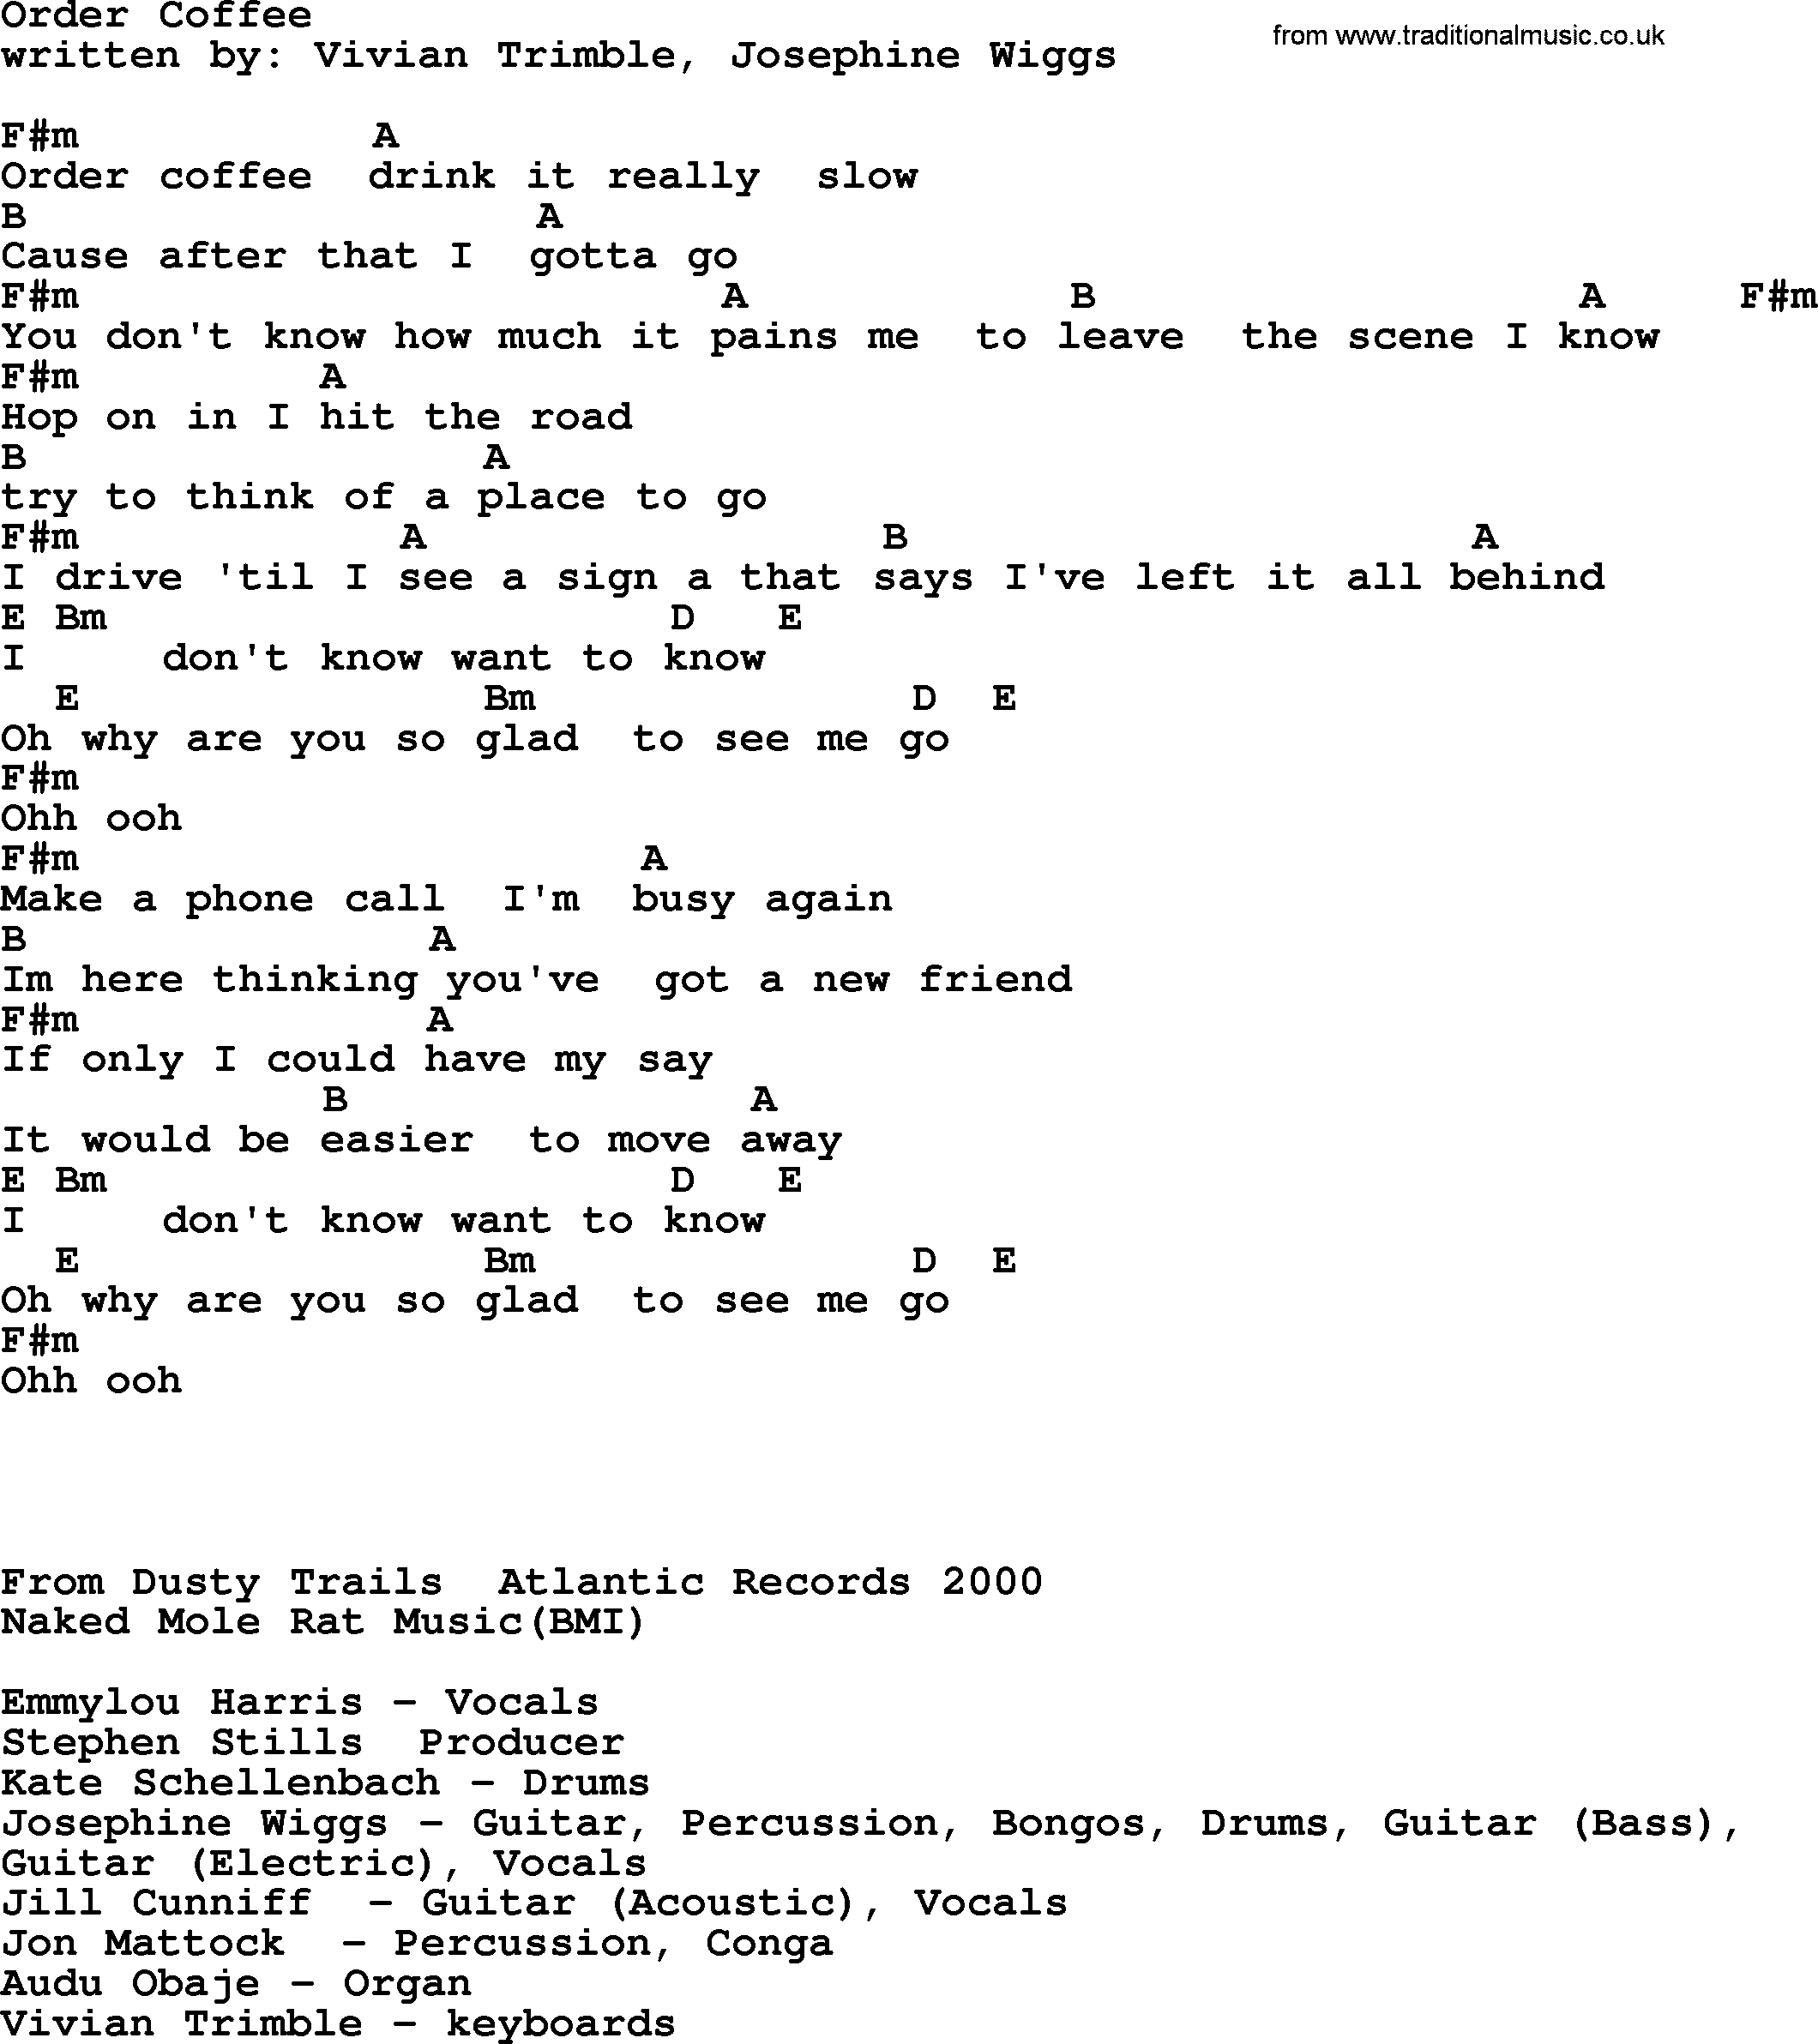 Emmylou Harris song: Order Coffee lyrics and chords